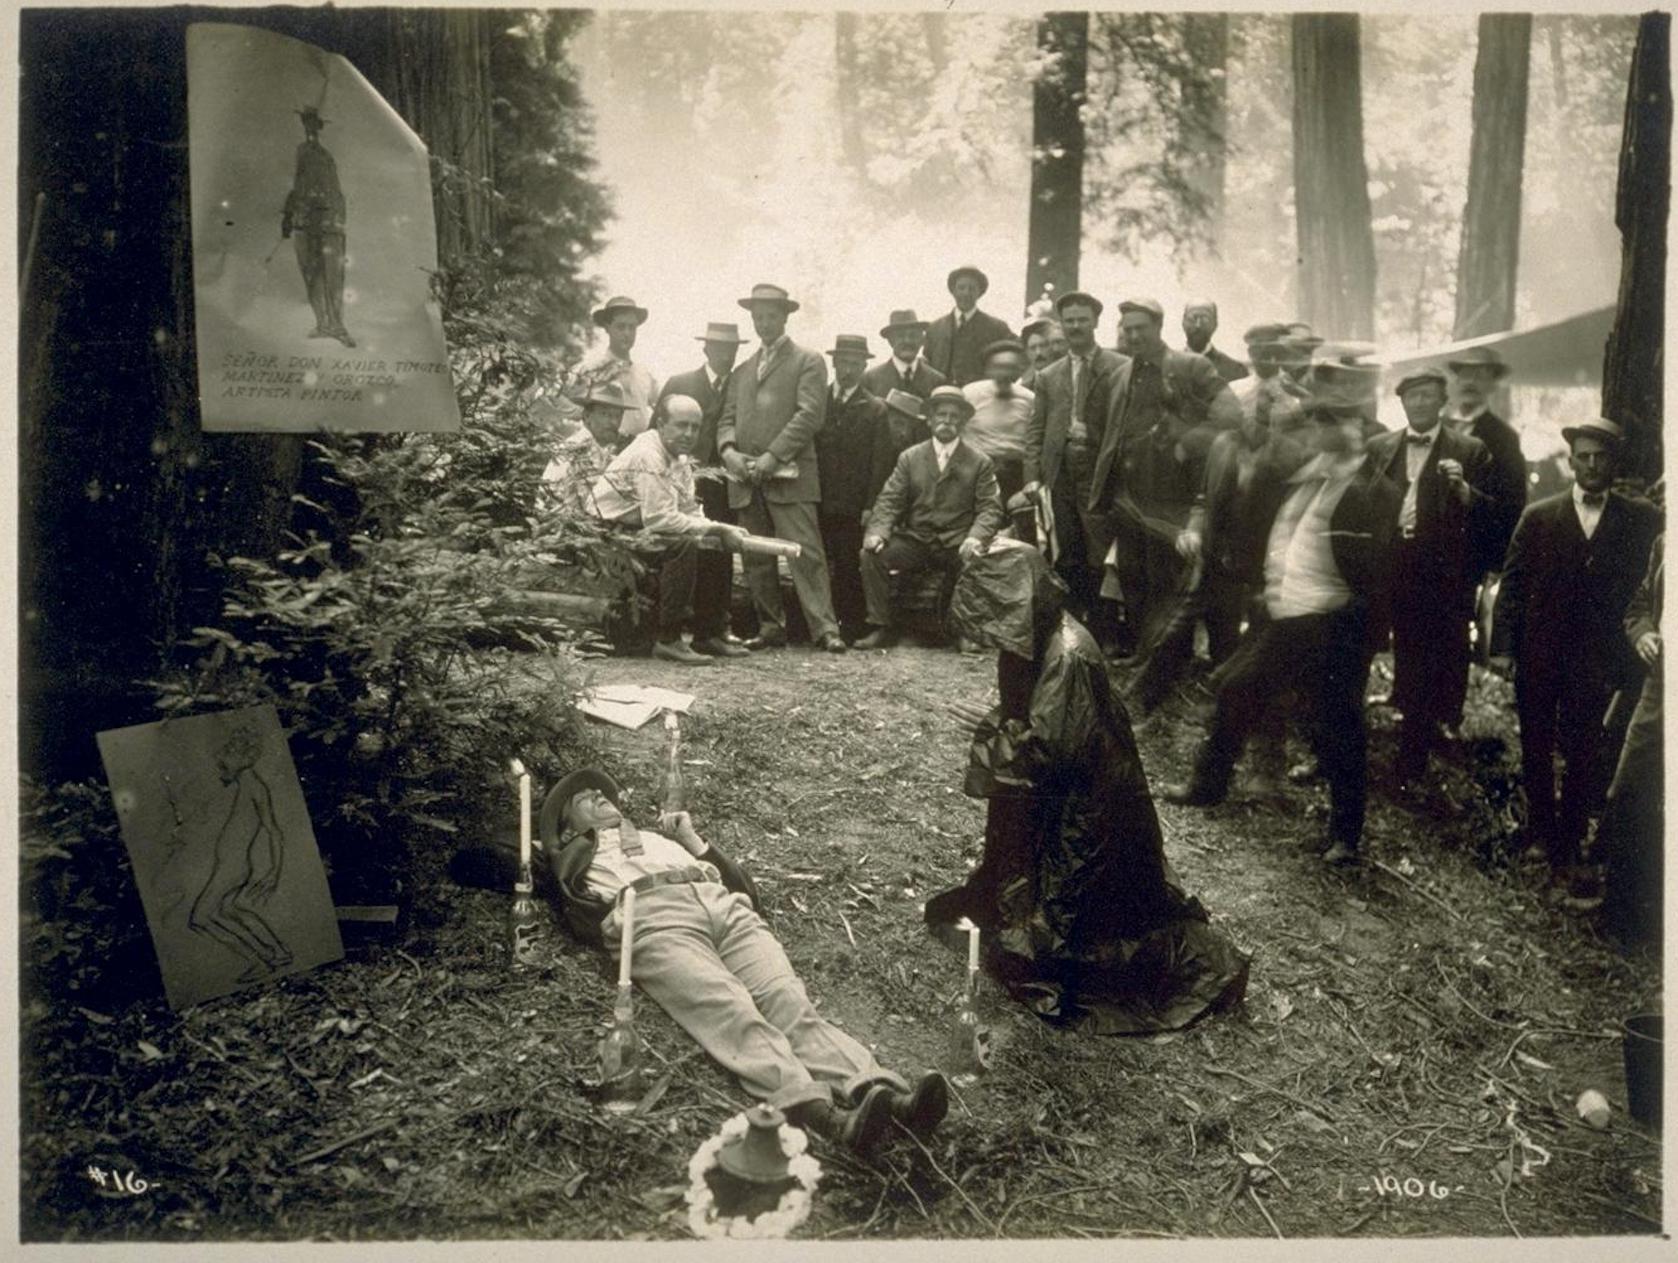 Ritualistic Human Sacrifice Performed at Bohemian Grove - 1906.jpg